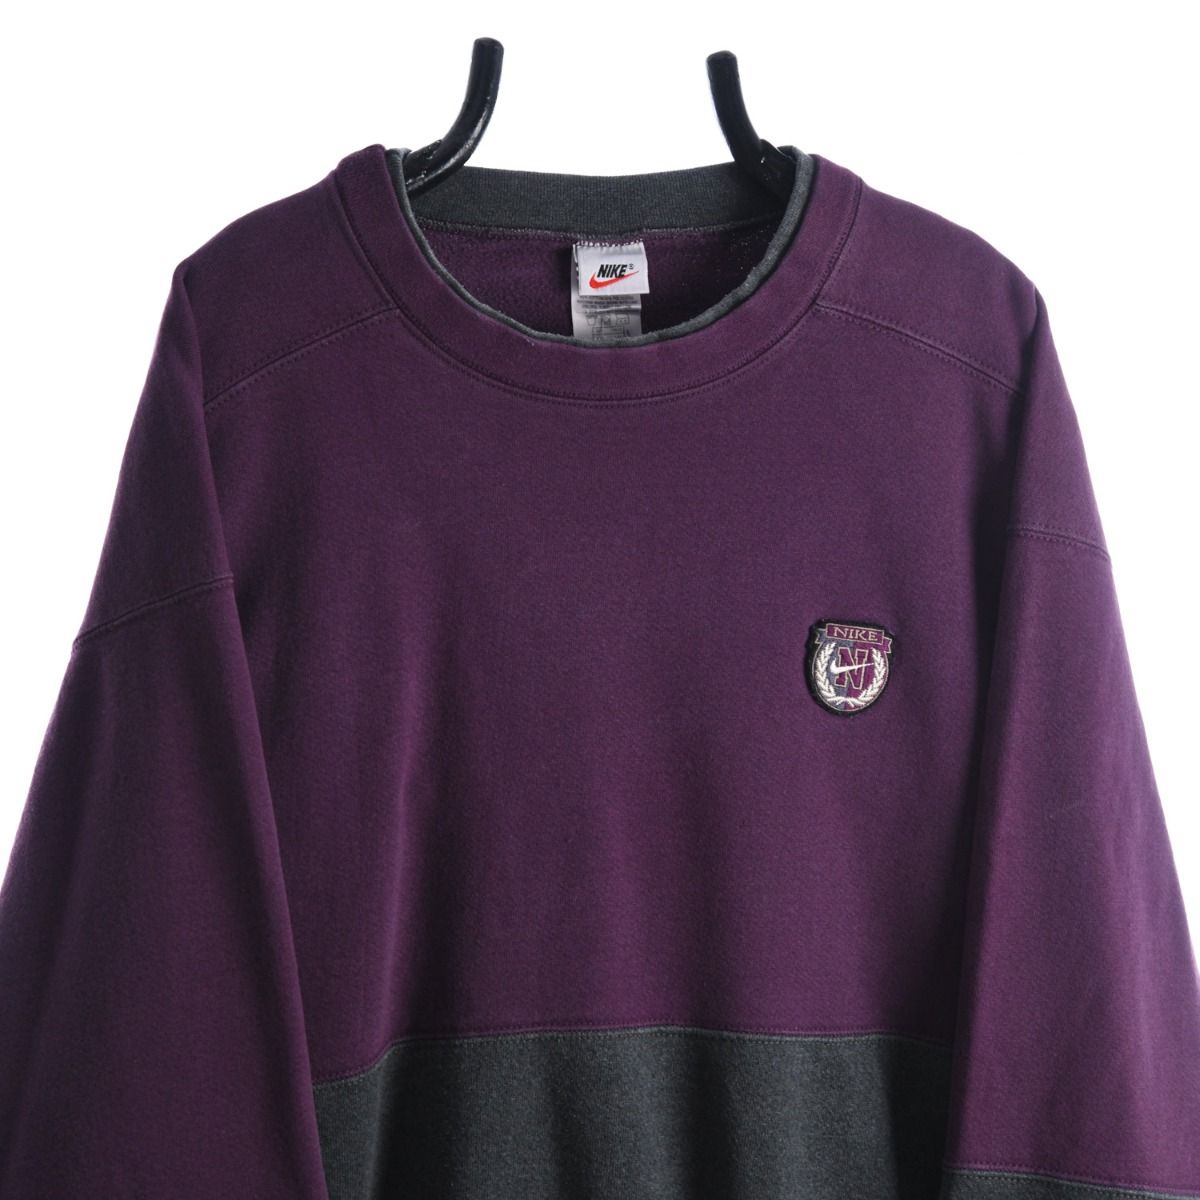 Nike 1990s Burgundy Sweatshirt